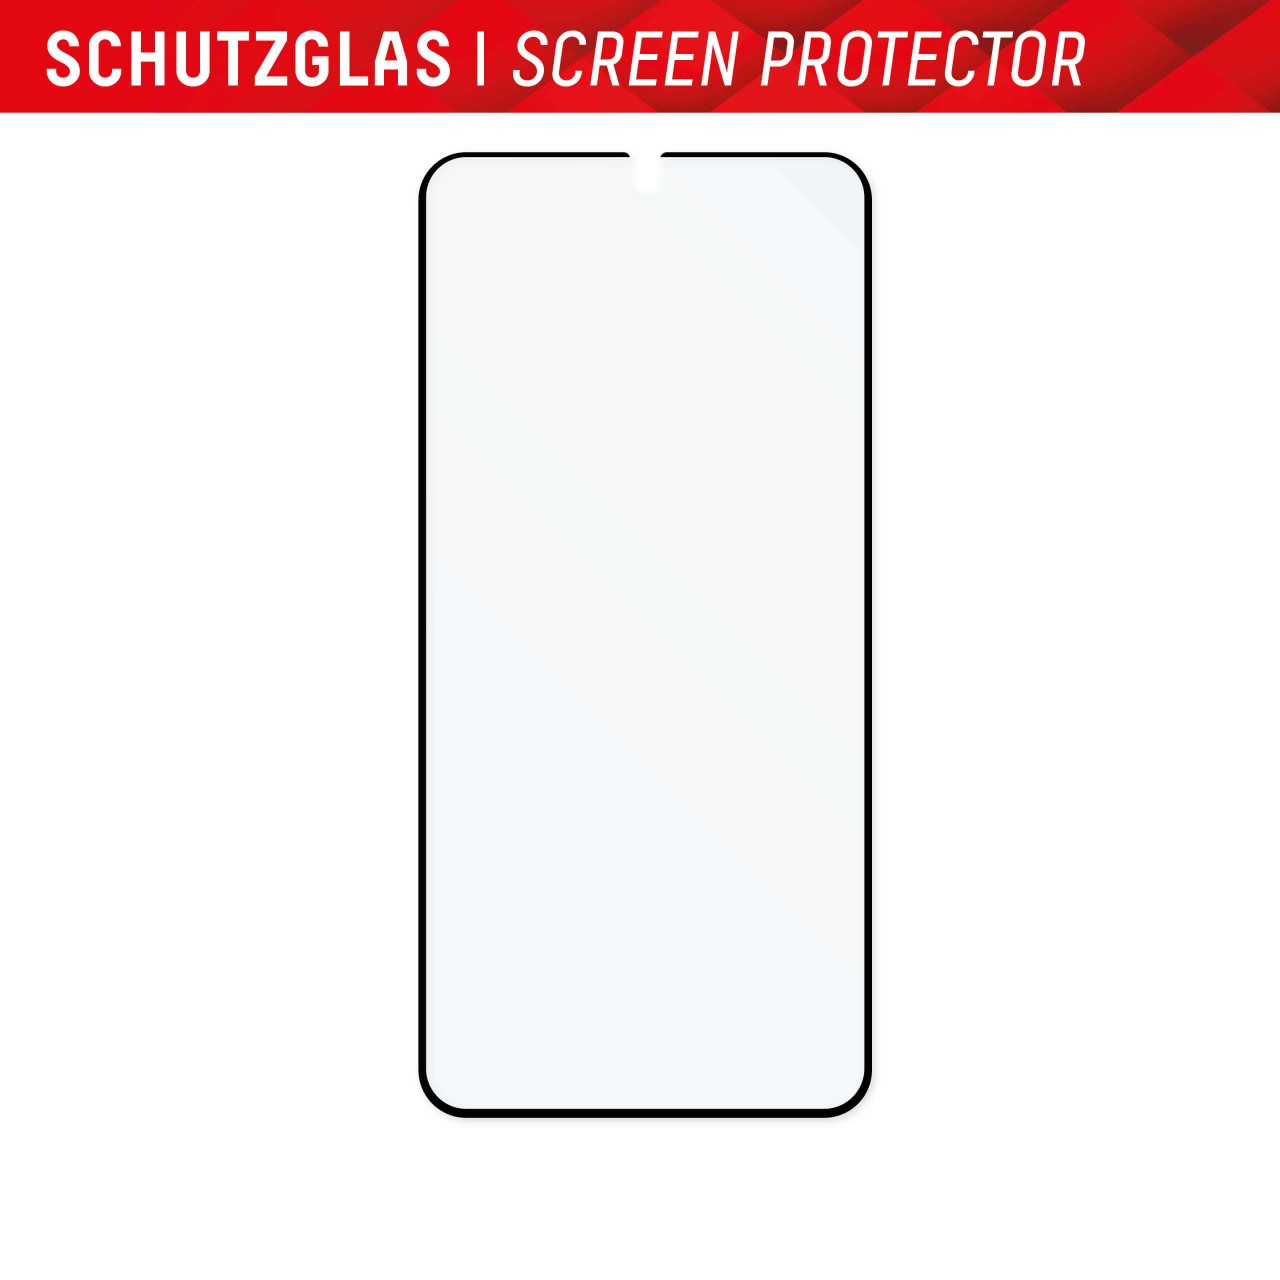 PRO-TOUCH GLASS ECO Samsung Galaxy S22+/S23+ Schutzglas Full Cover